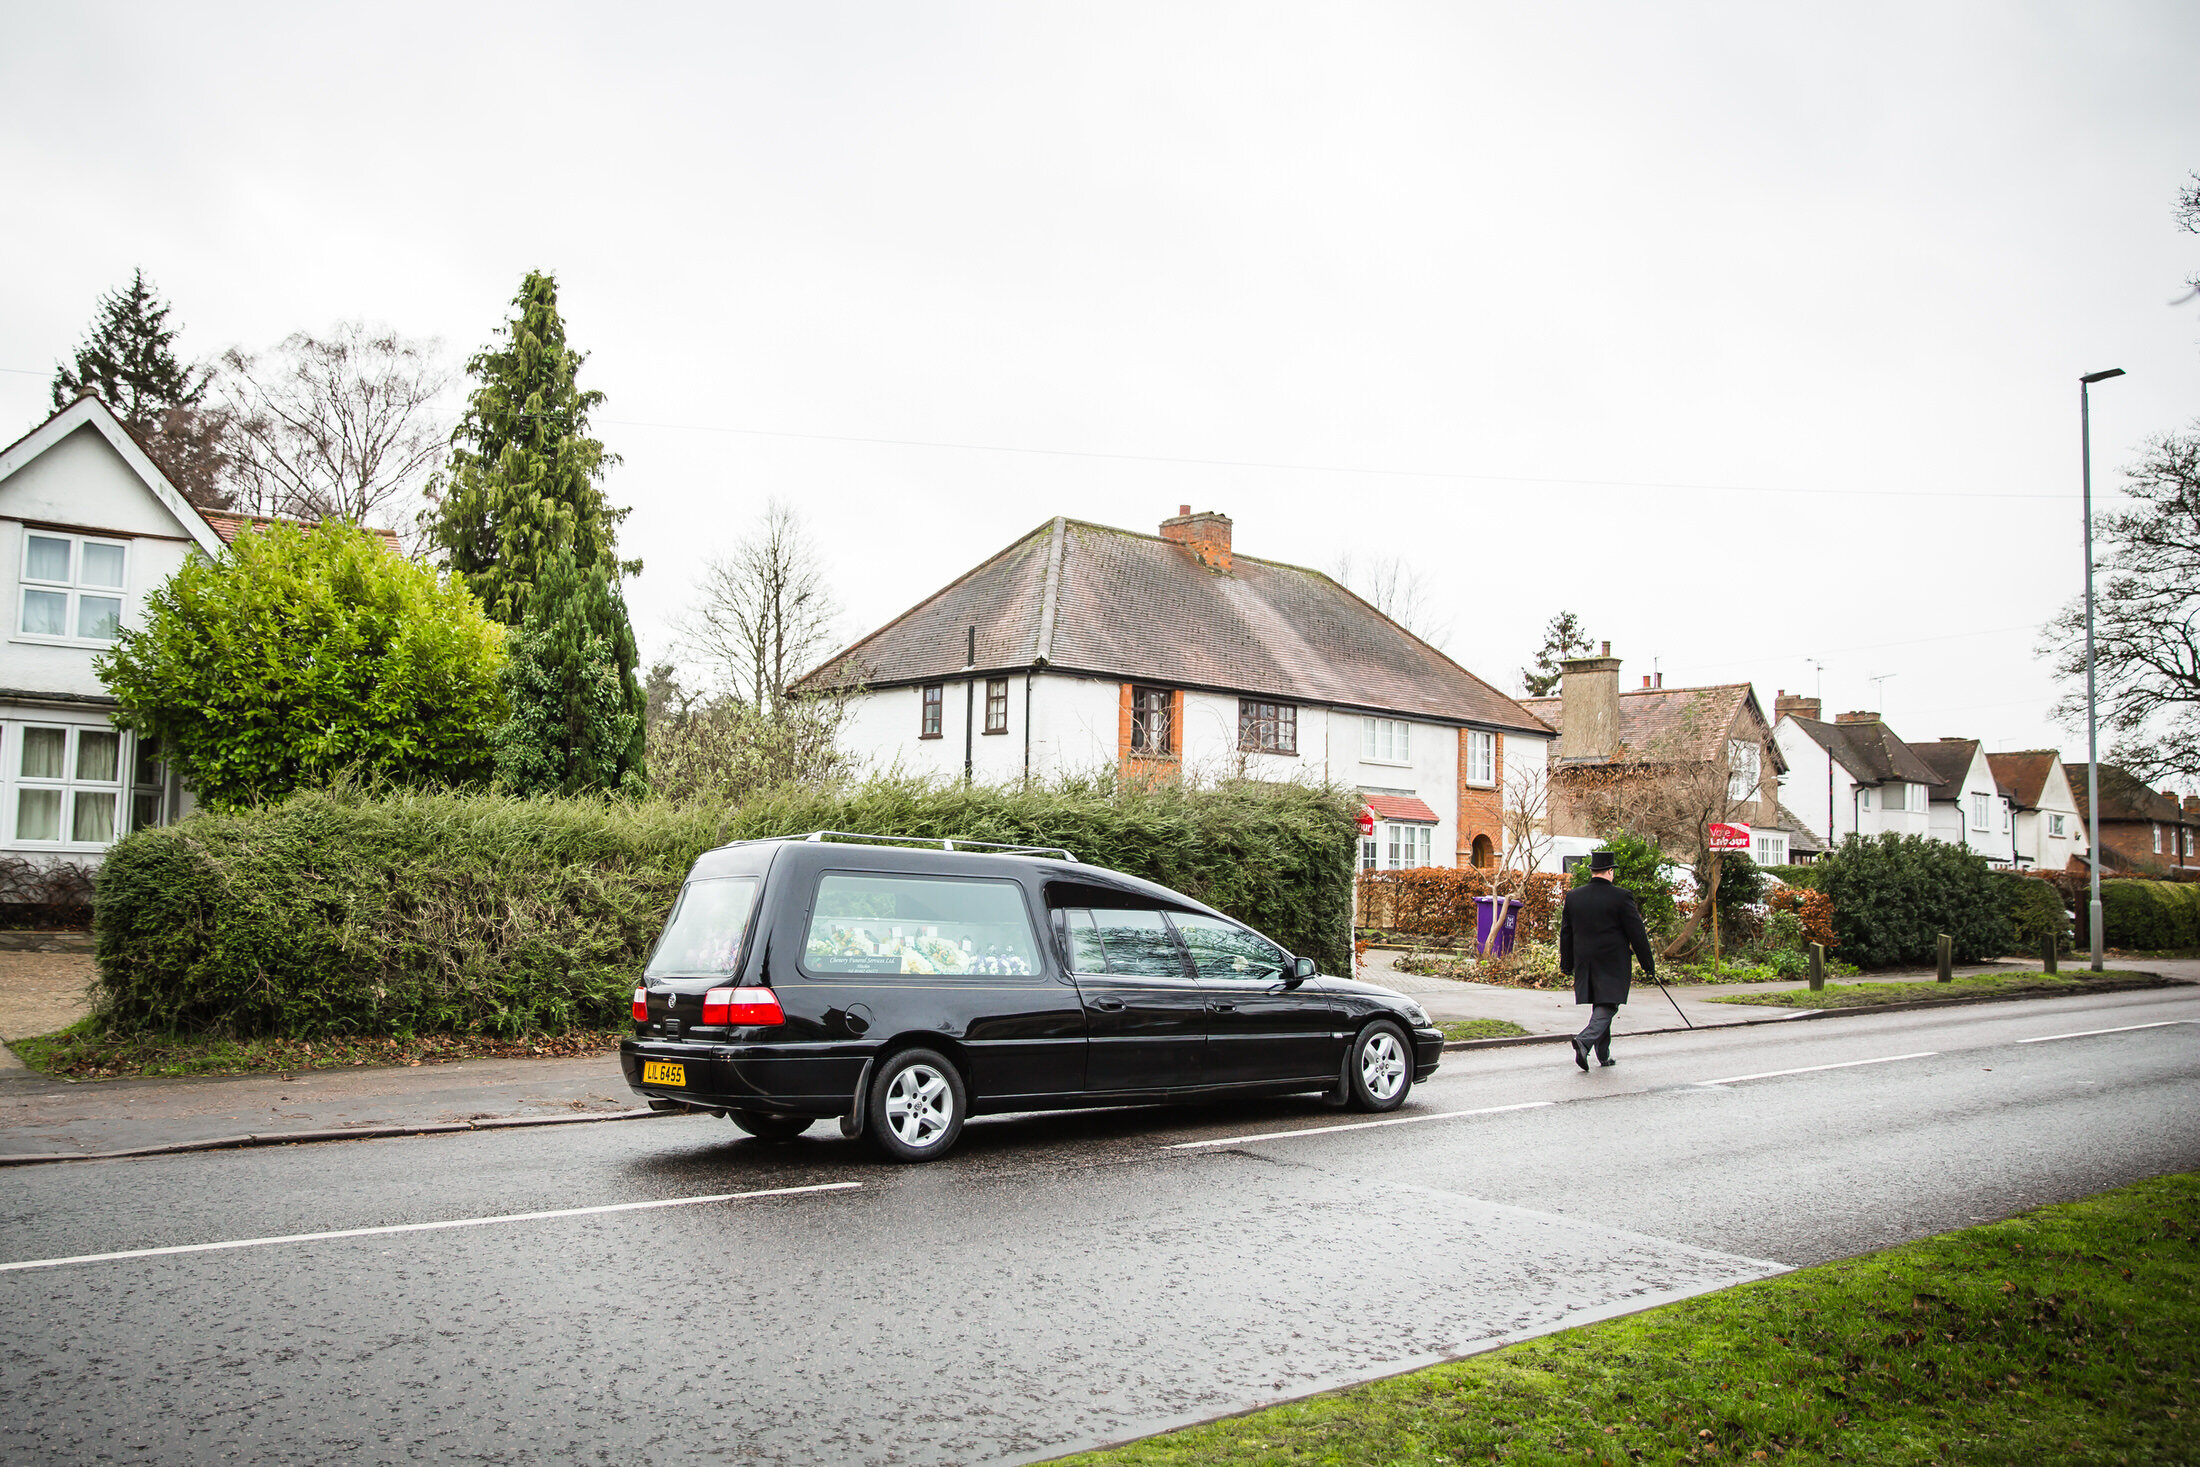 ICKNIELD WAY CEMETERY, Hertfordshire Funeral Photographer